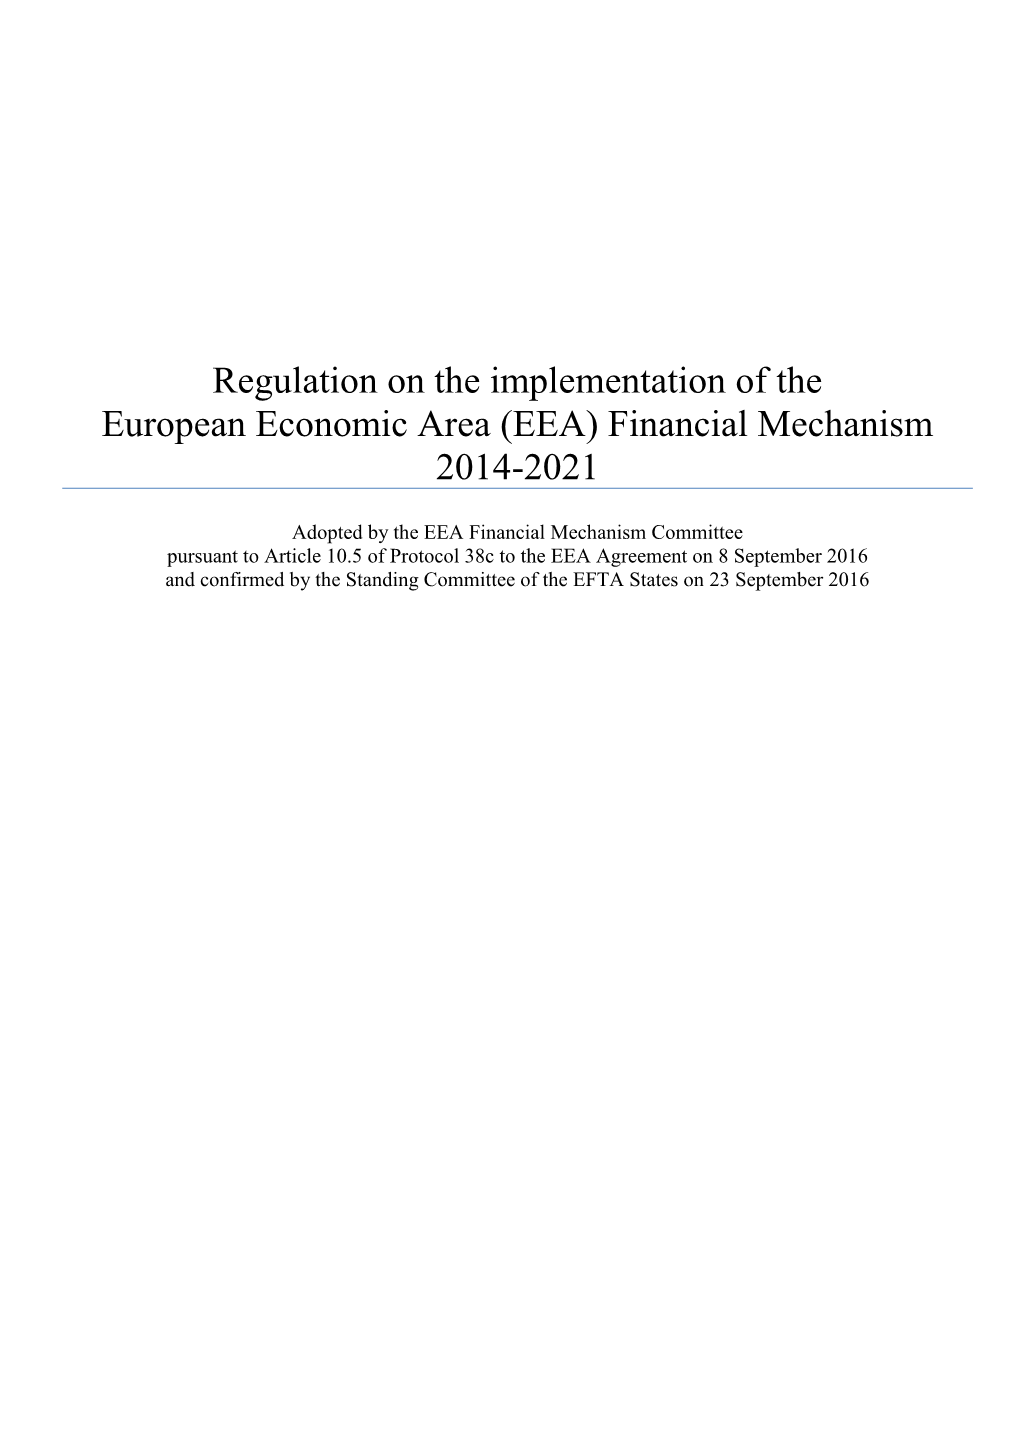 Regulation on the Implementation of the European Economic Area (EEA) Financial Mechanism 2014-2021